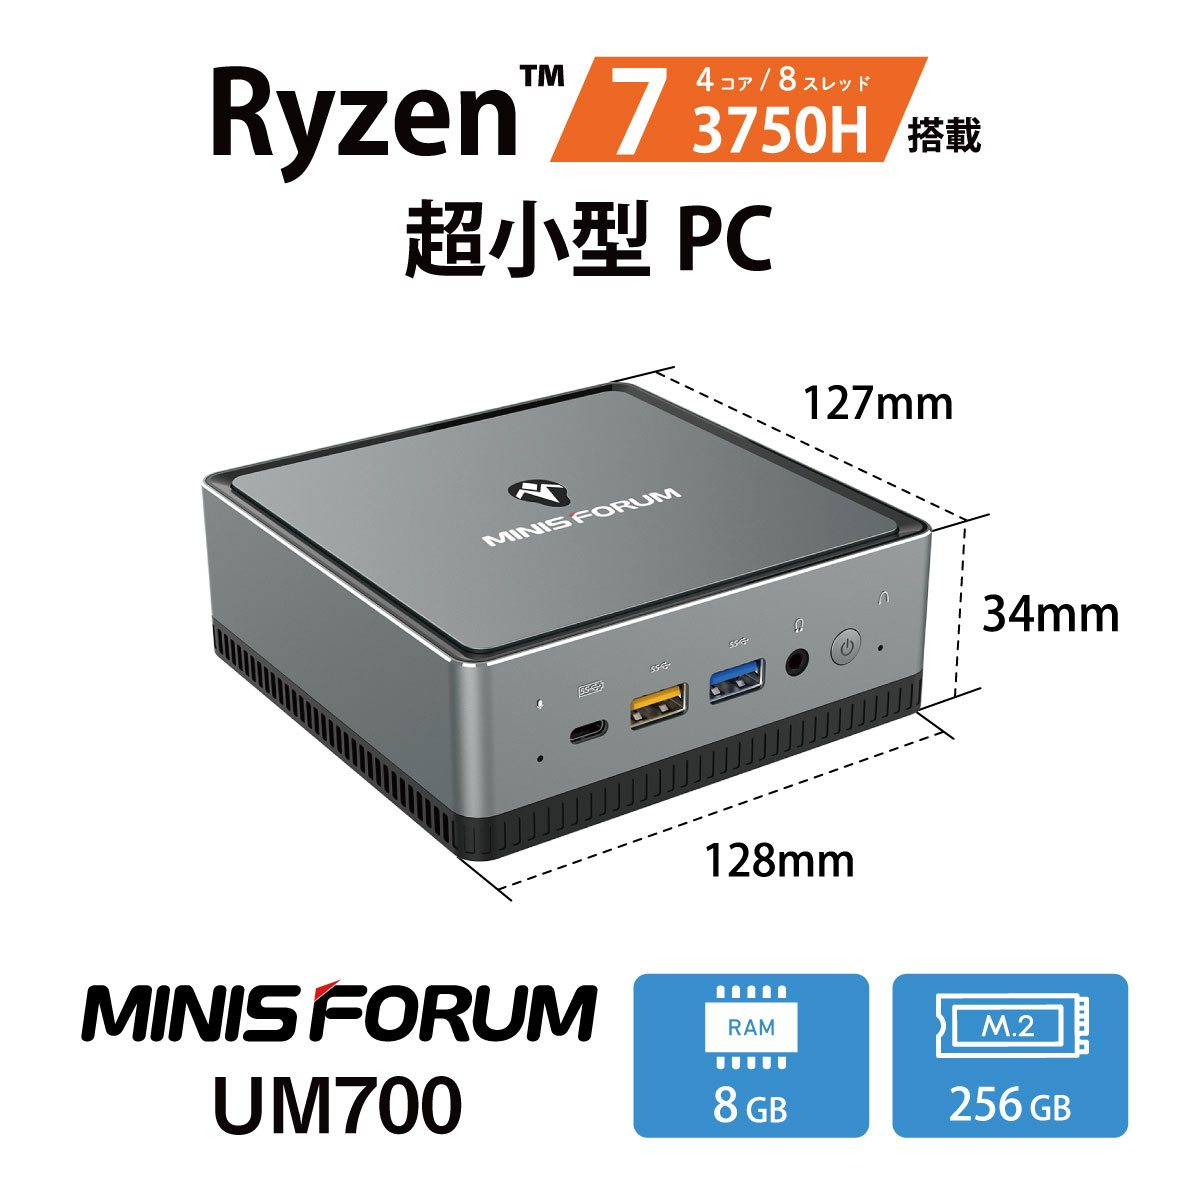 MINISFORUM DeskMini UM700 Mini PC AMD Ryzen 7 3750H India